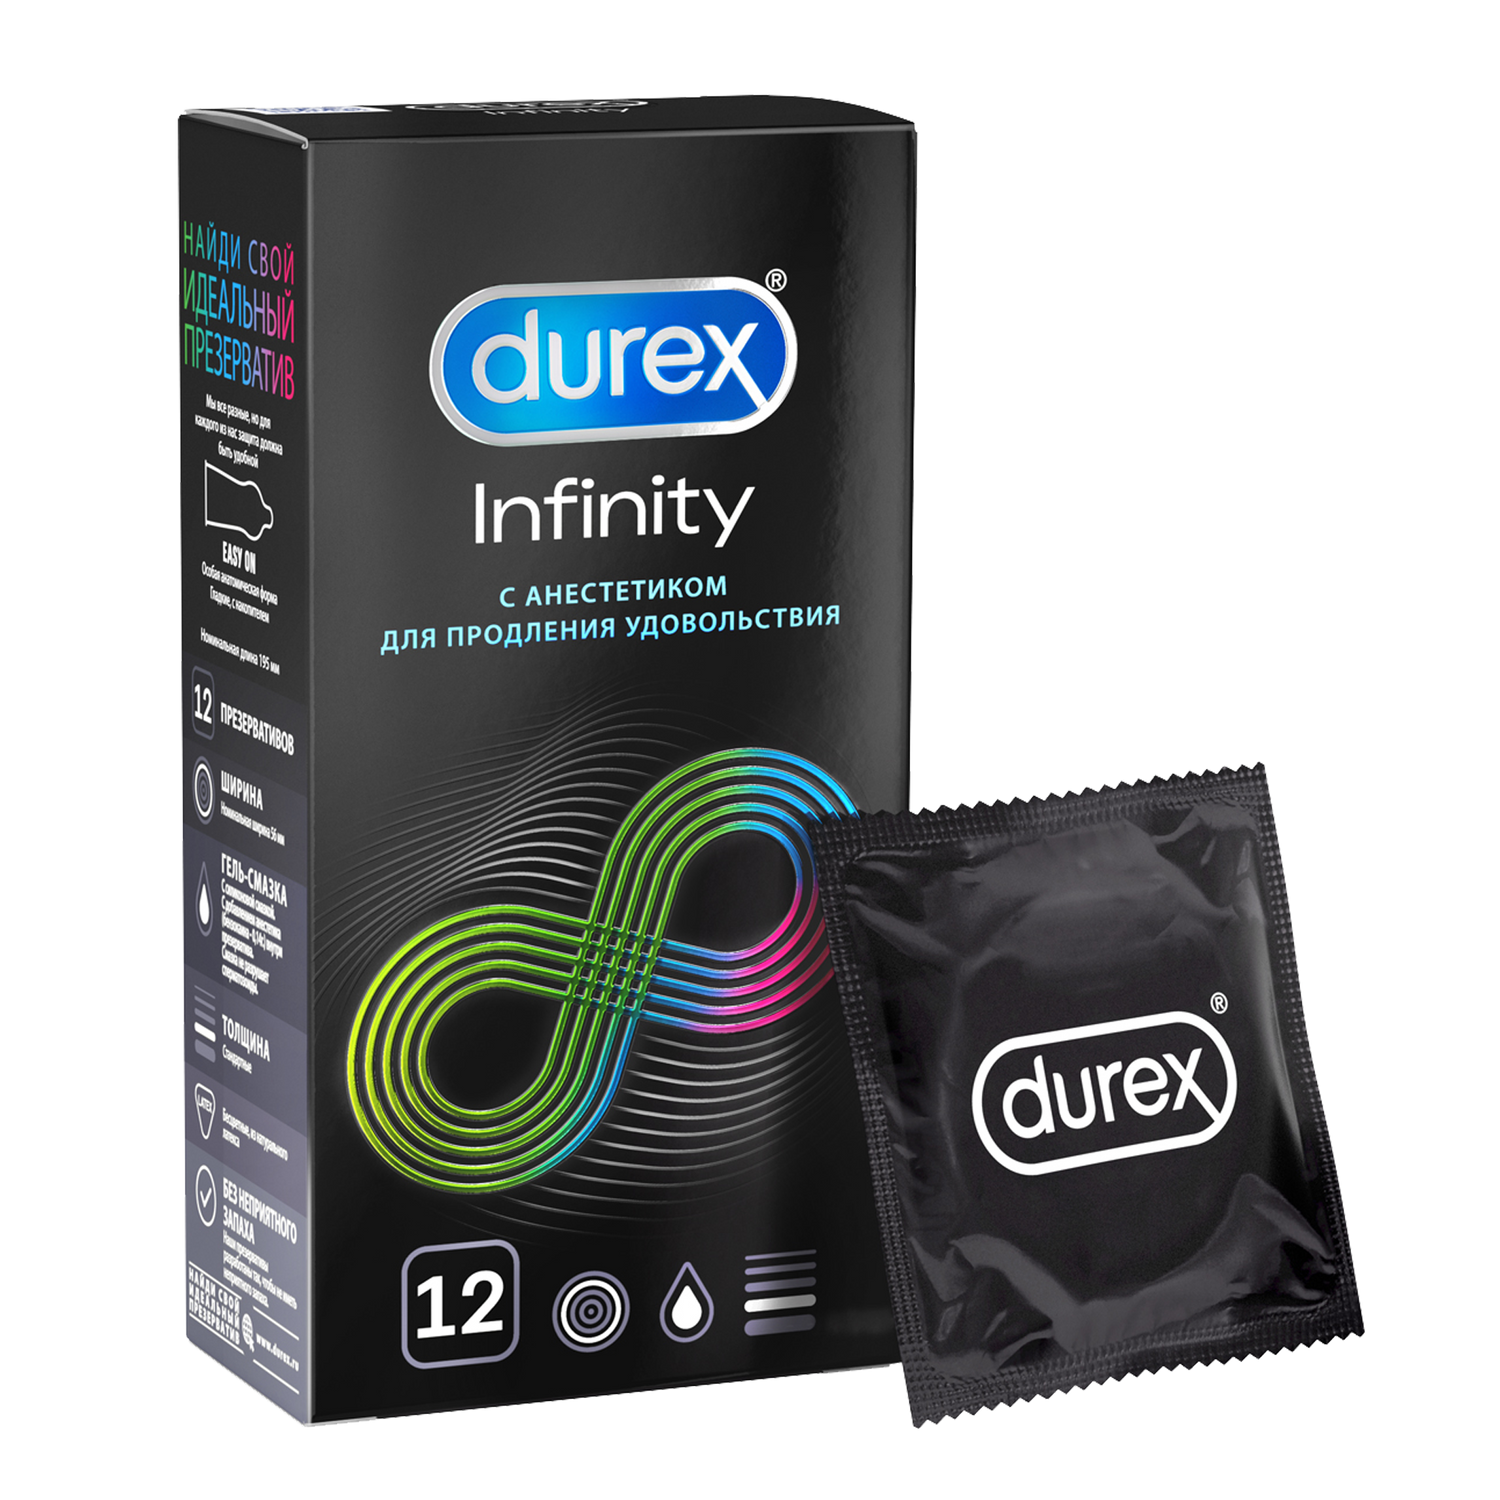 Презервативы Durex Infinity гладкие с анестетиком, 12 шт. sico презервативы пролонгирующие с анестетиком 12